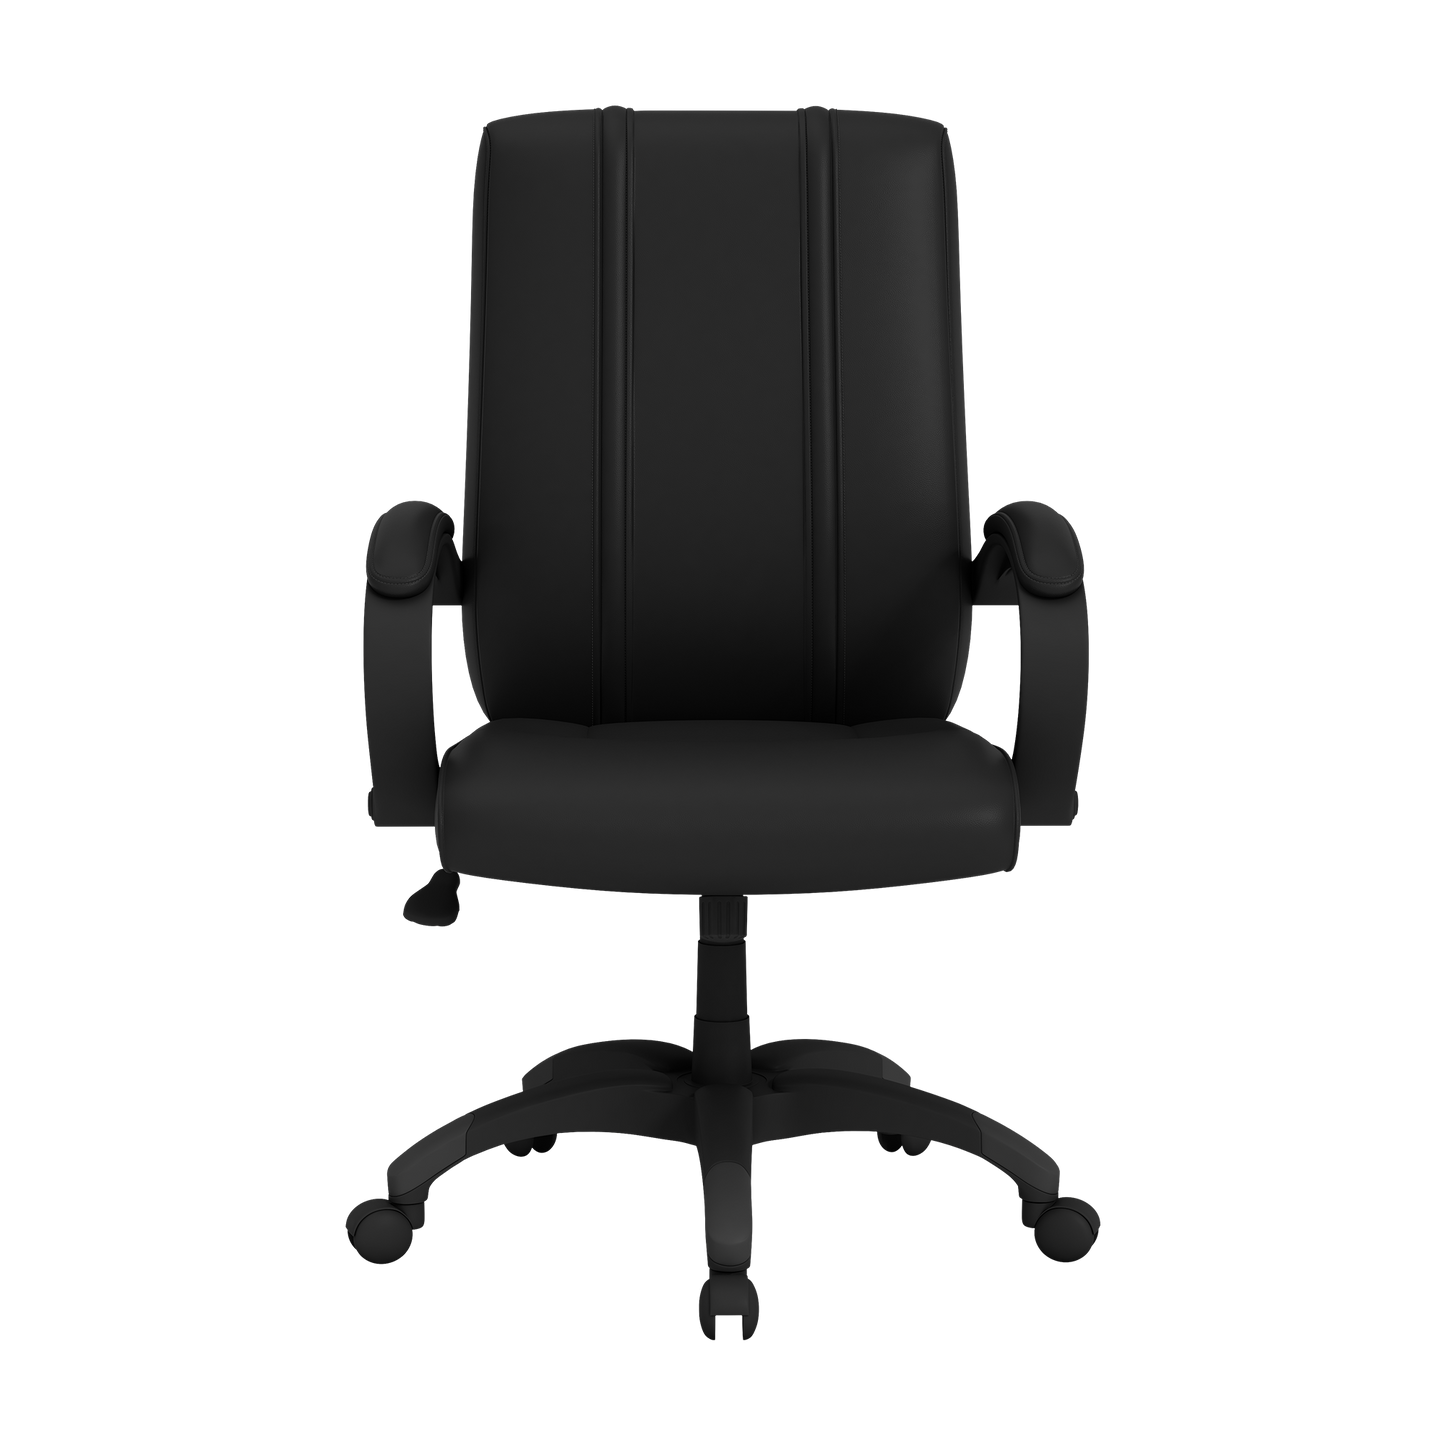 Office Chair 1000 with Arkansas Razorbacks Logo